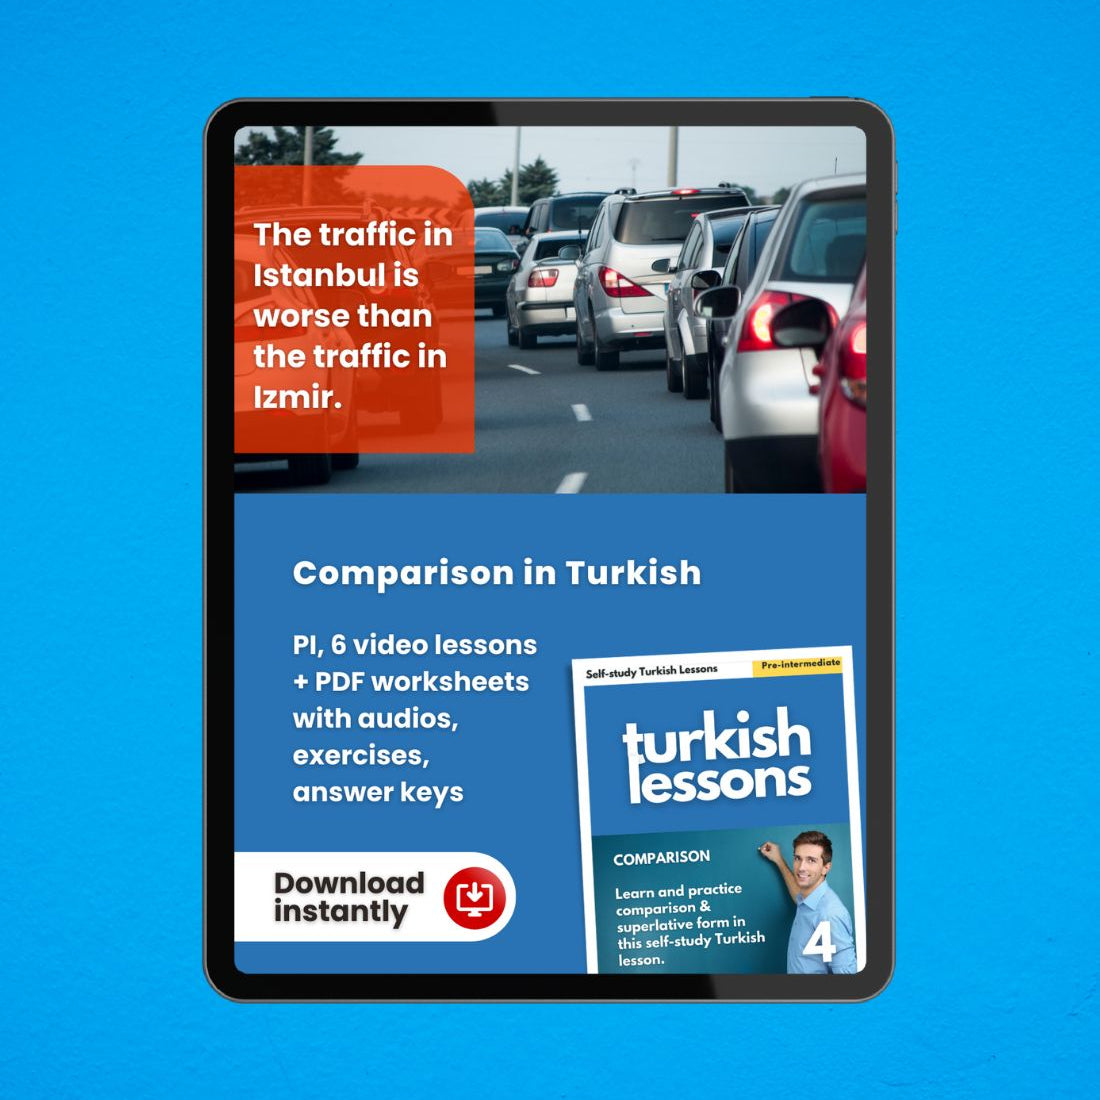 turkish lessons - comparison superlative form